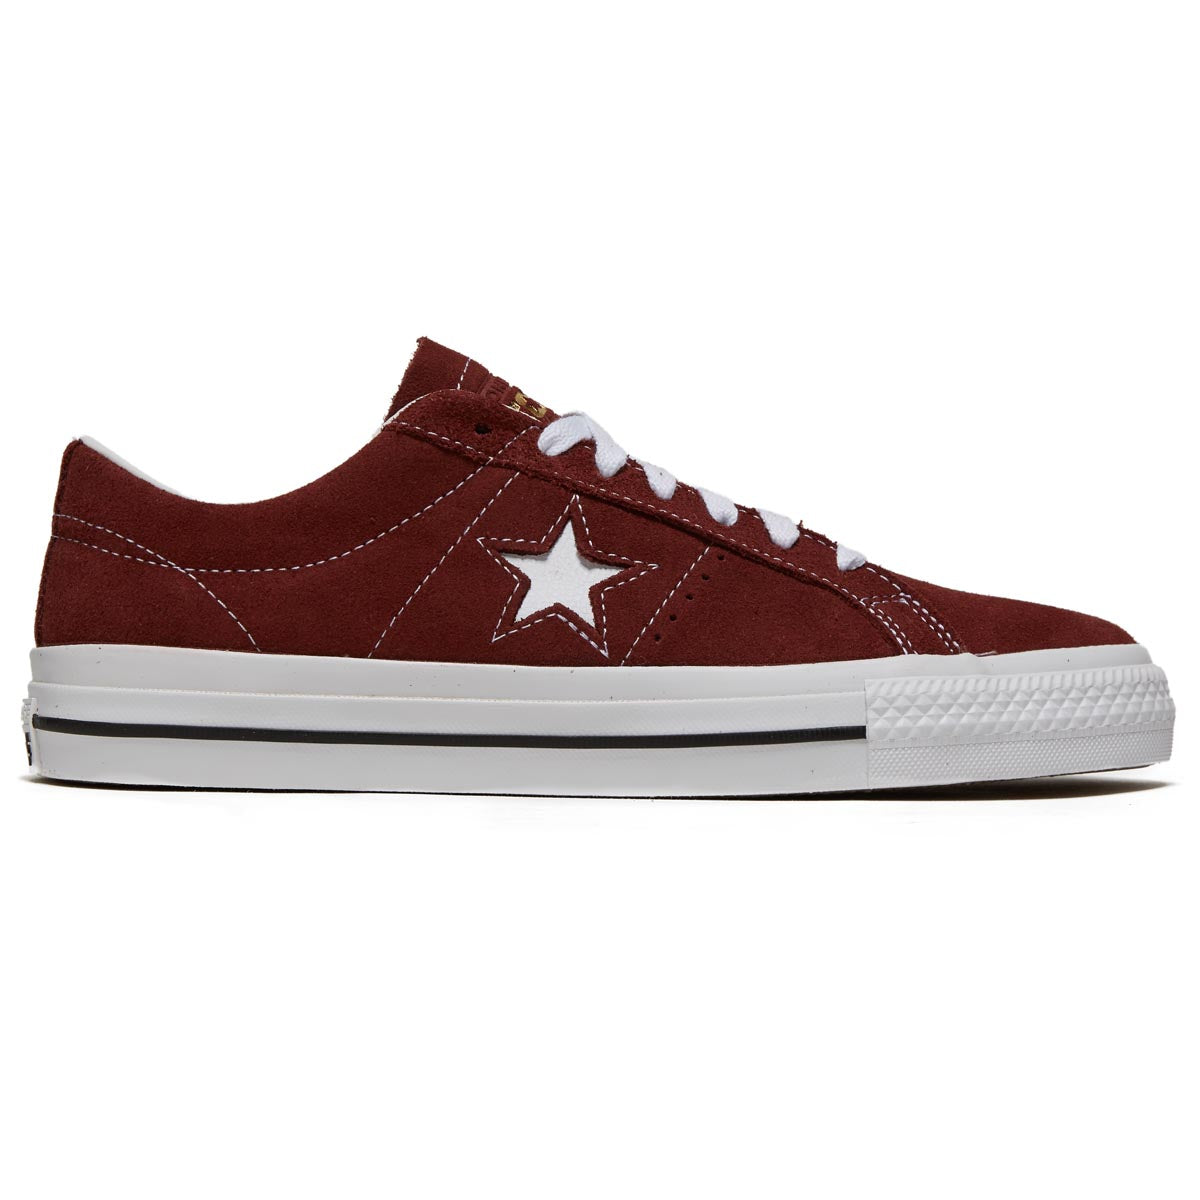 Converse One Star Pro Shoes - Pueblo Brown/White/Black image 1